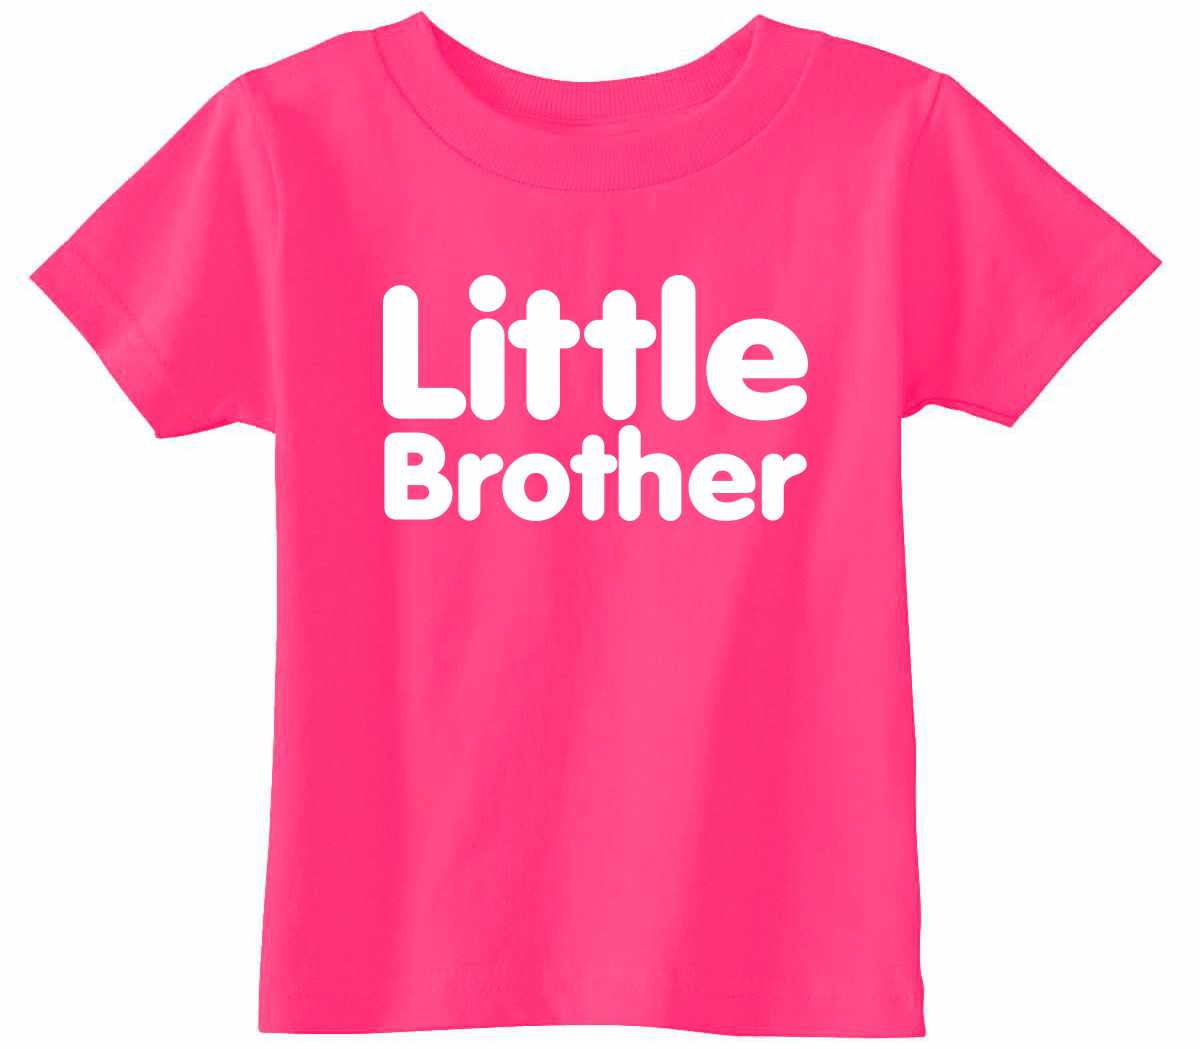 Little Brother Infant/Toddler  (#1028-7)